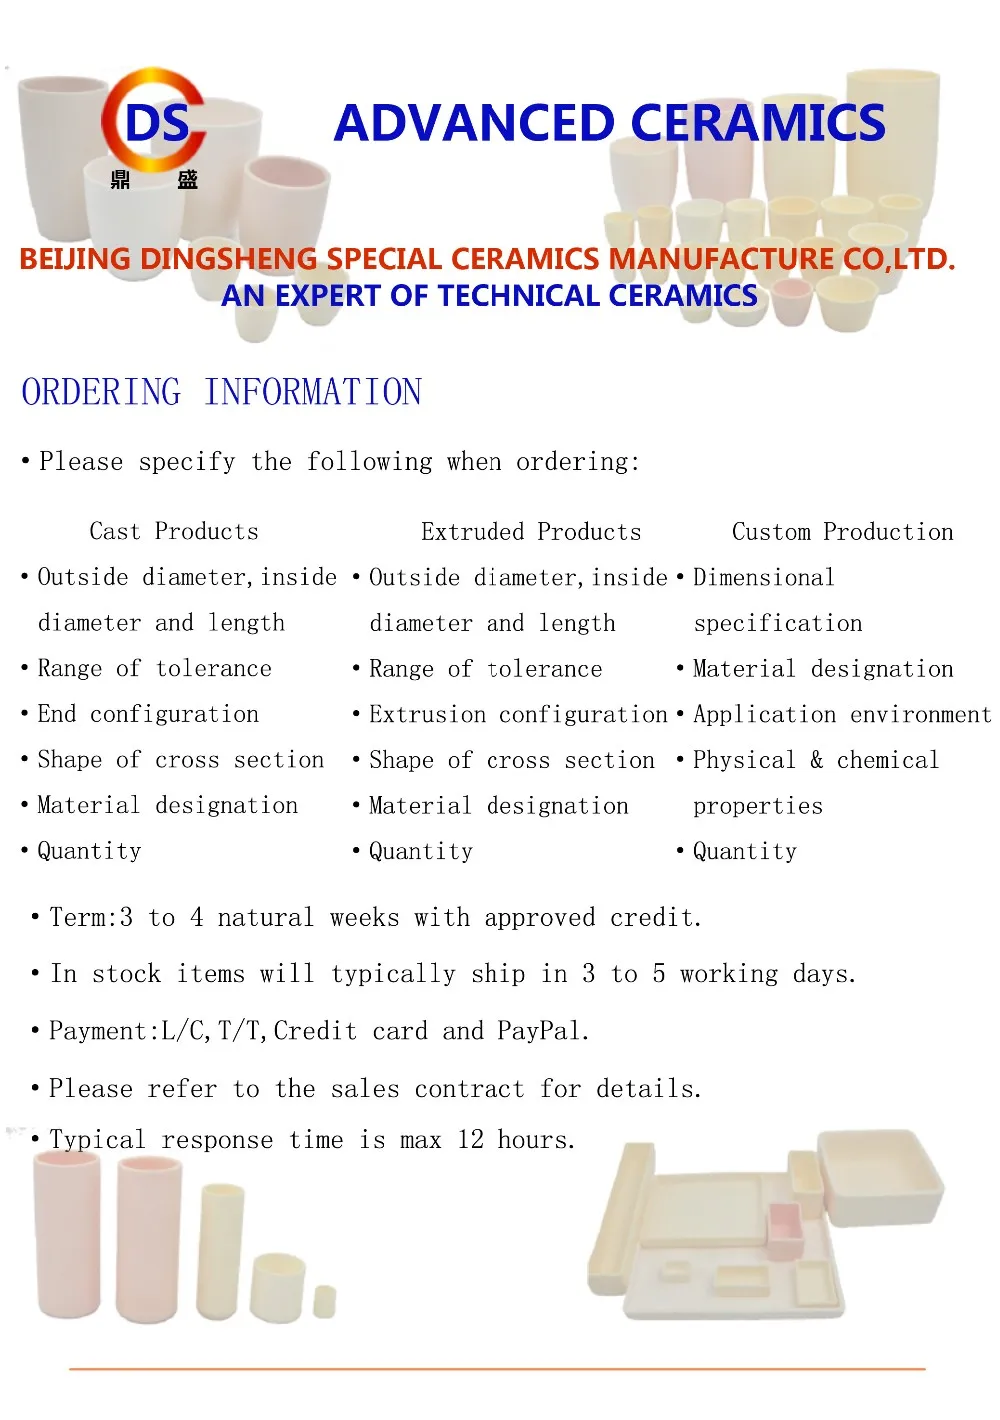 Machinable Glass Ceramic Rod/Macor bar D50*L100mm/Ceramic Processing Custom/Ceramic Refractory Rod